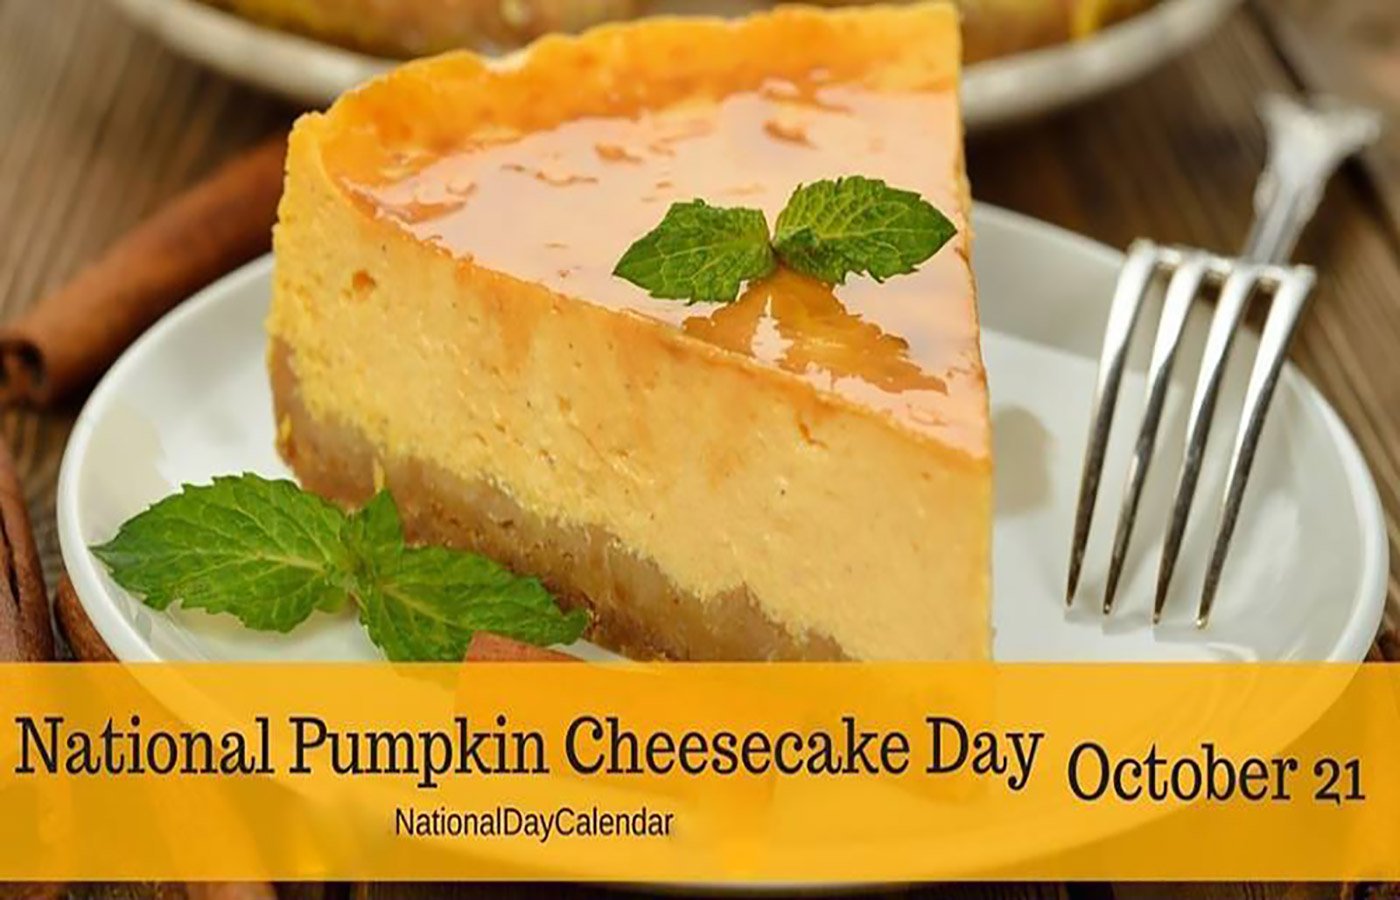 No-Bake Pumpkin Cheesecake to Celebrate the Day